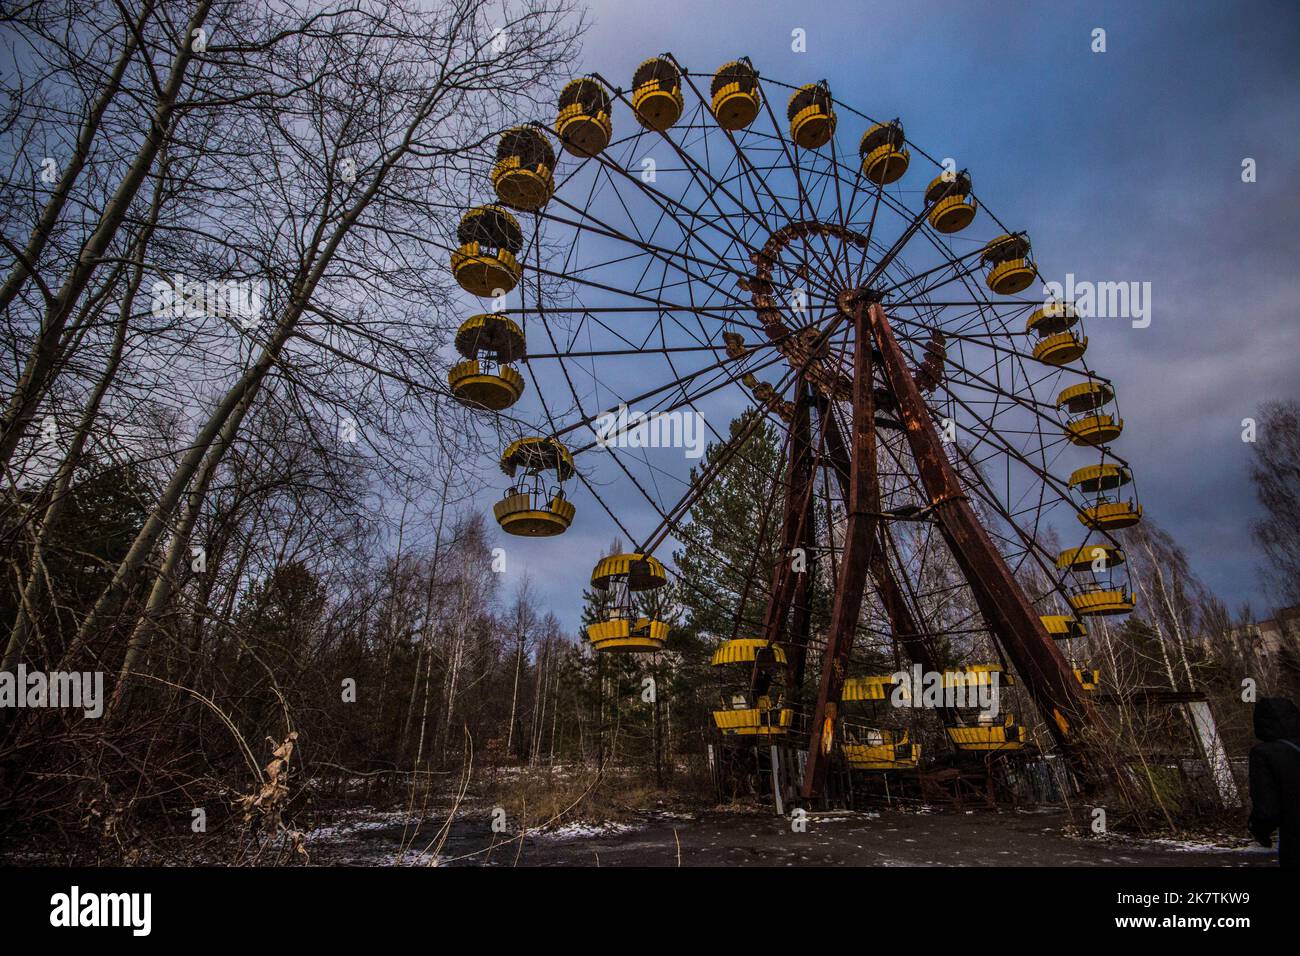 The Ferris wheel at the abandoned amusement park in Pripyat, Ukraine Stock Photo